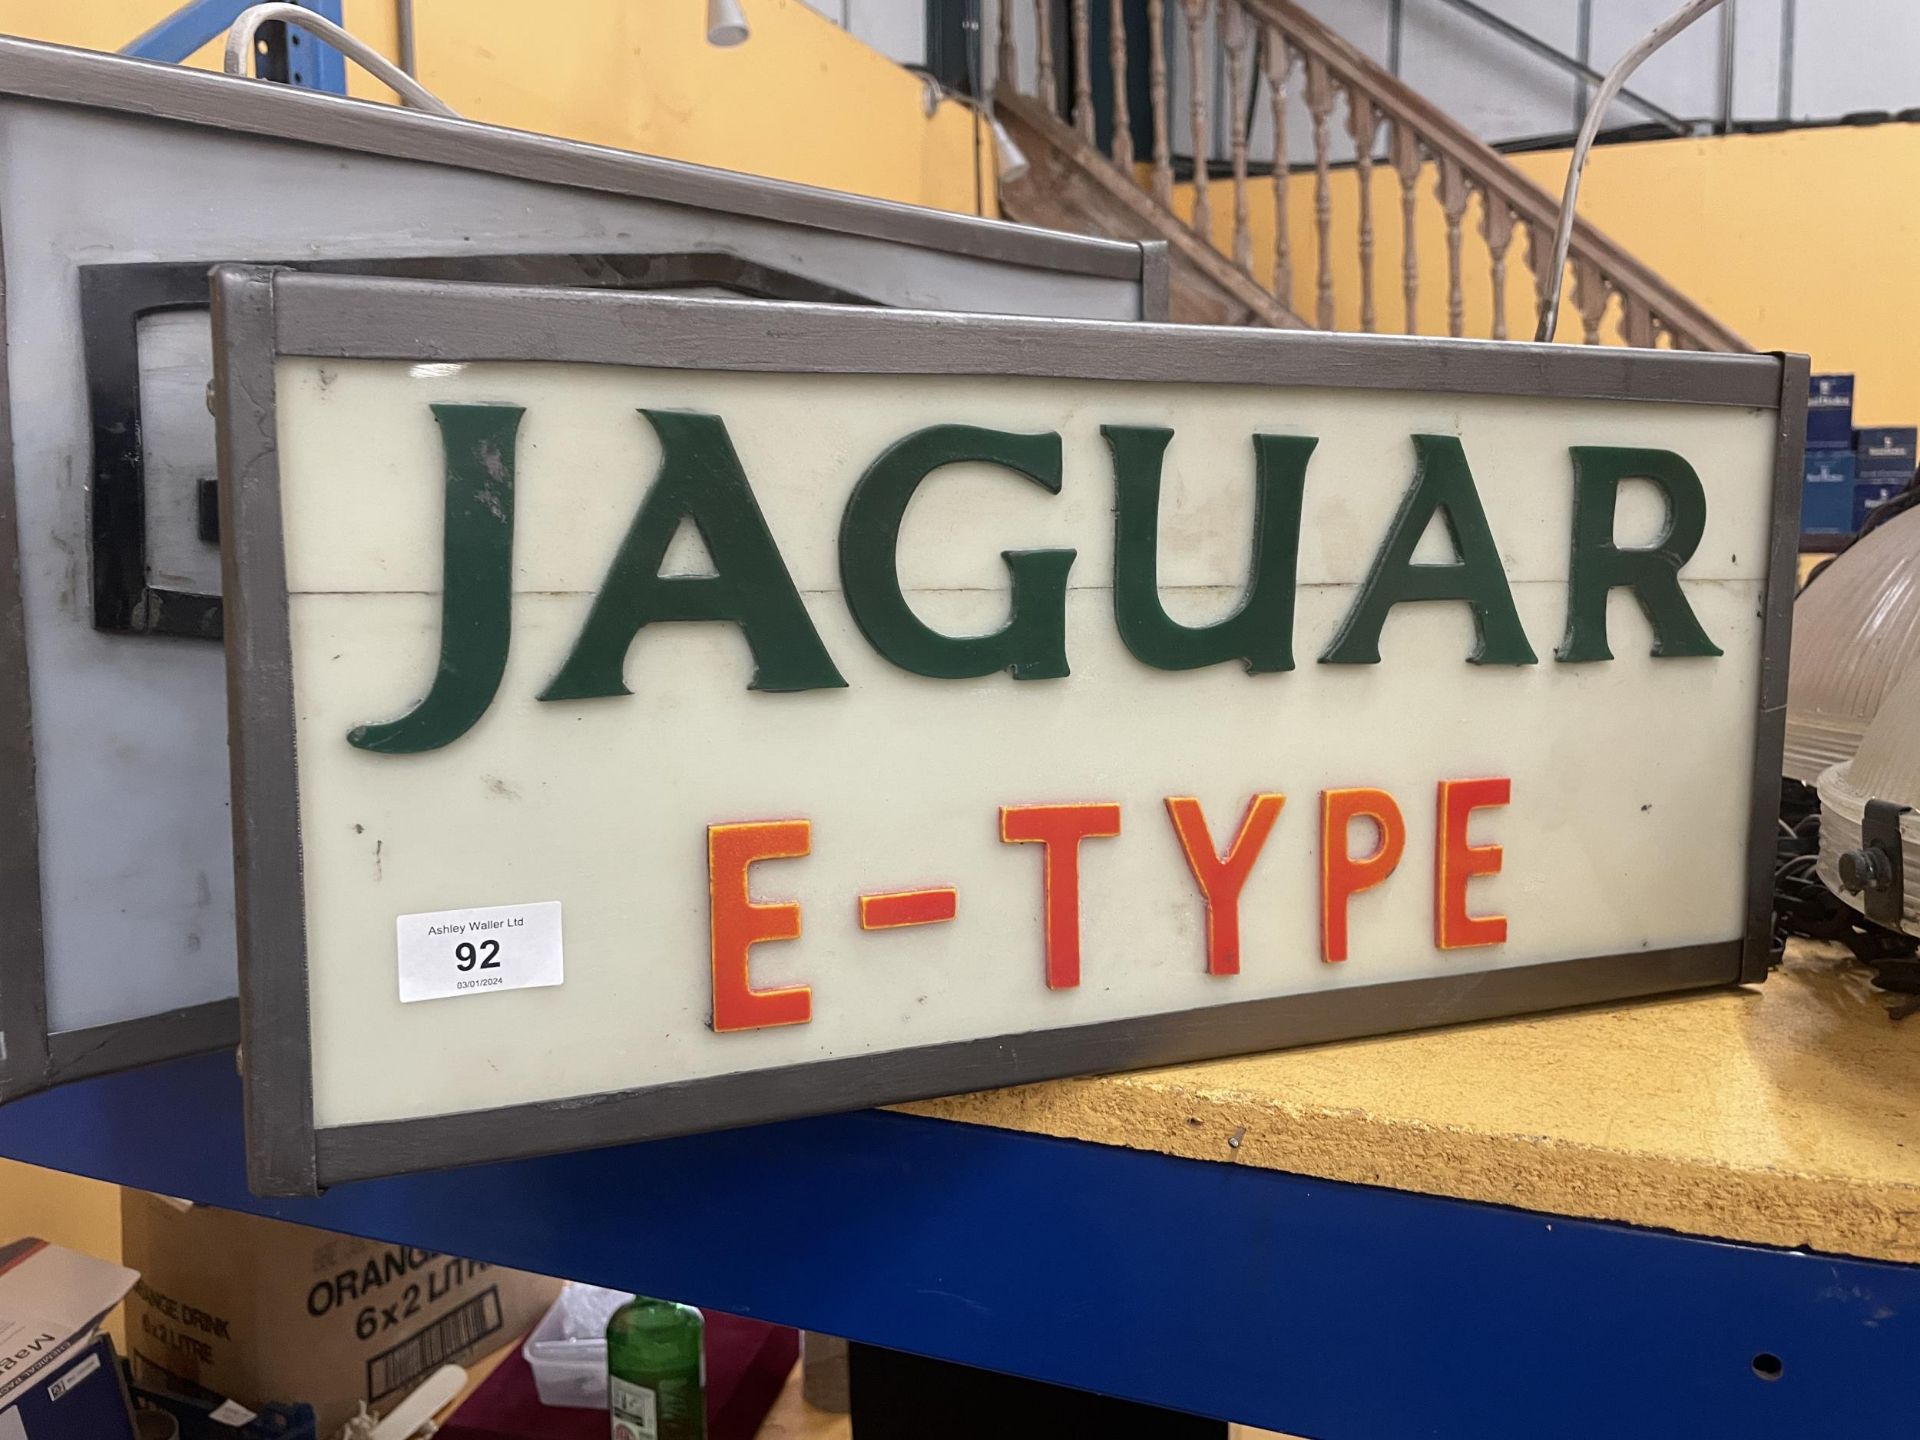 A JAGUAR E-TYPE ILLUMINATED BOX SIGN